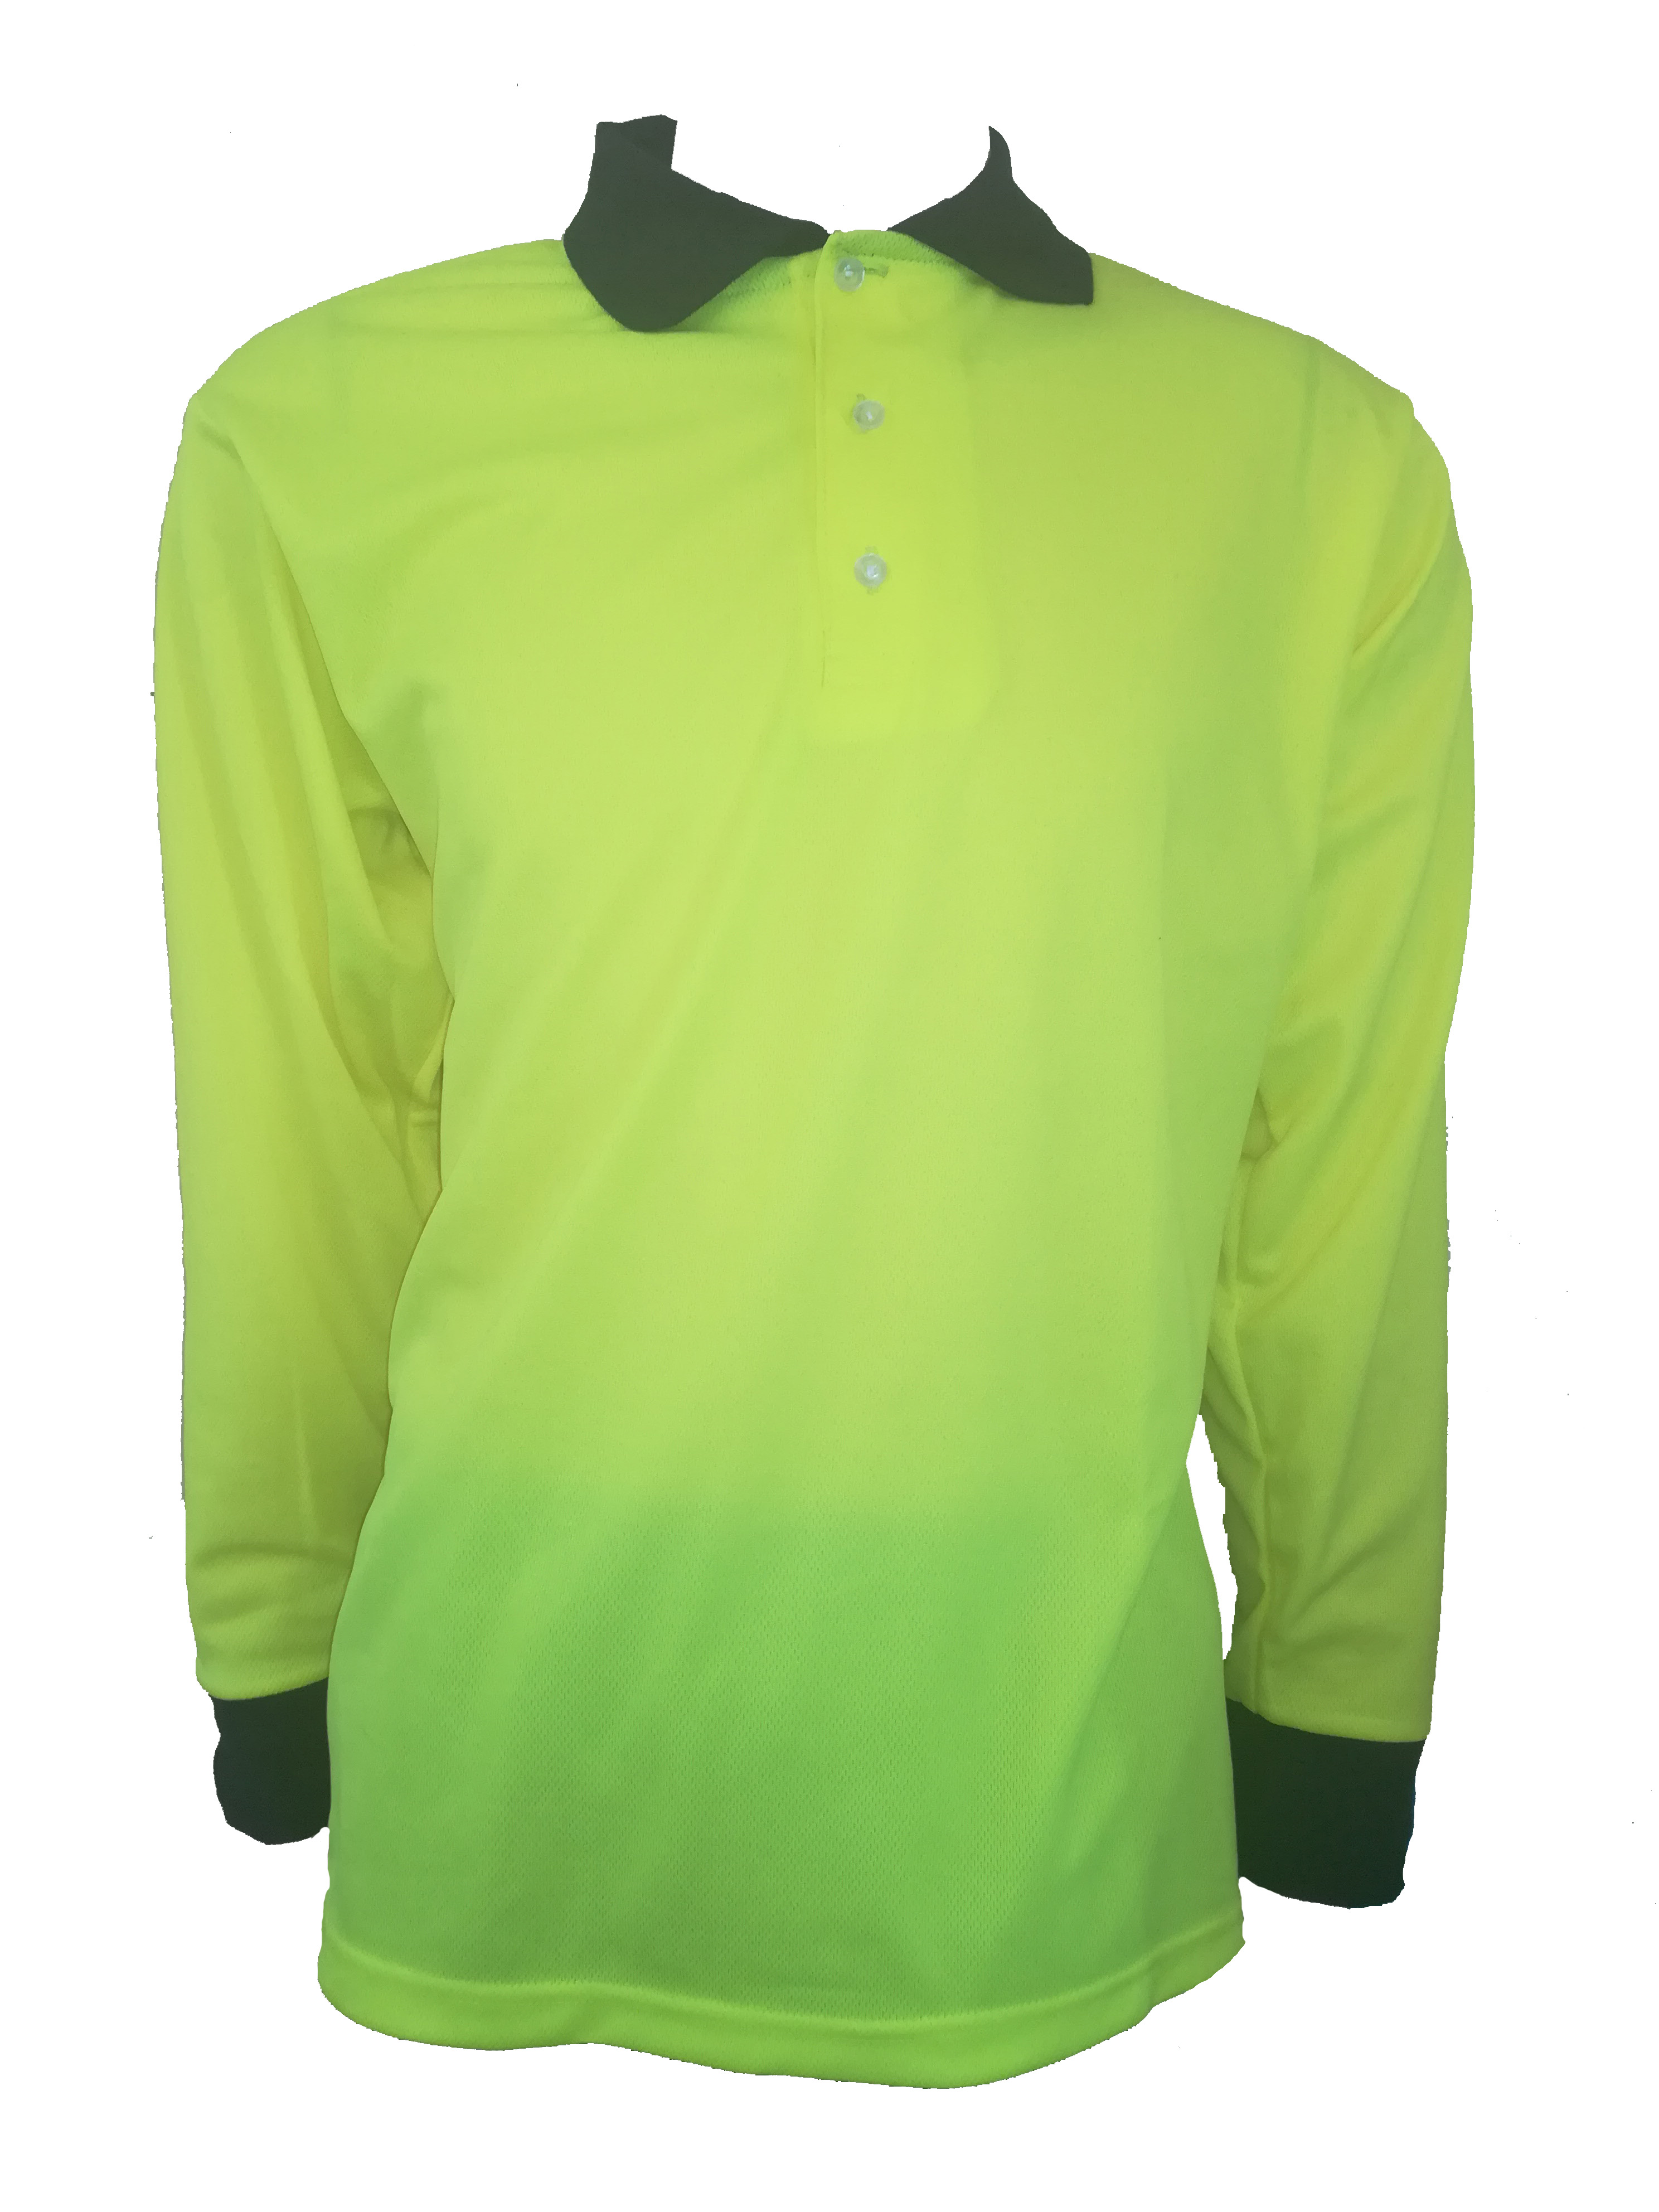 Long Sleeve Reflecto Hi Viz Golf Shirt